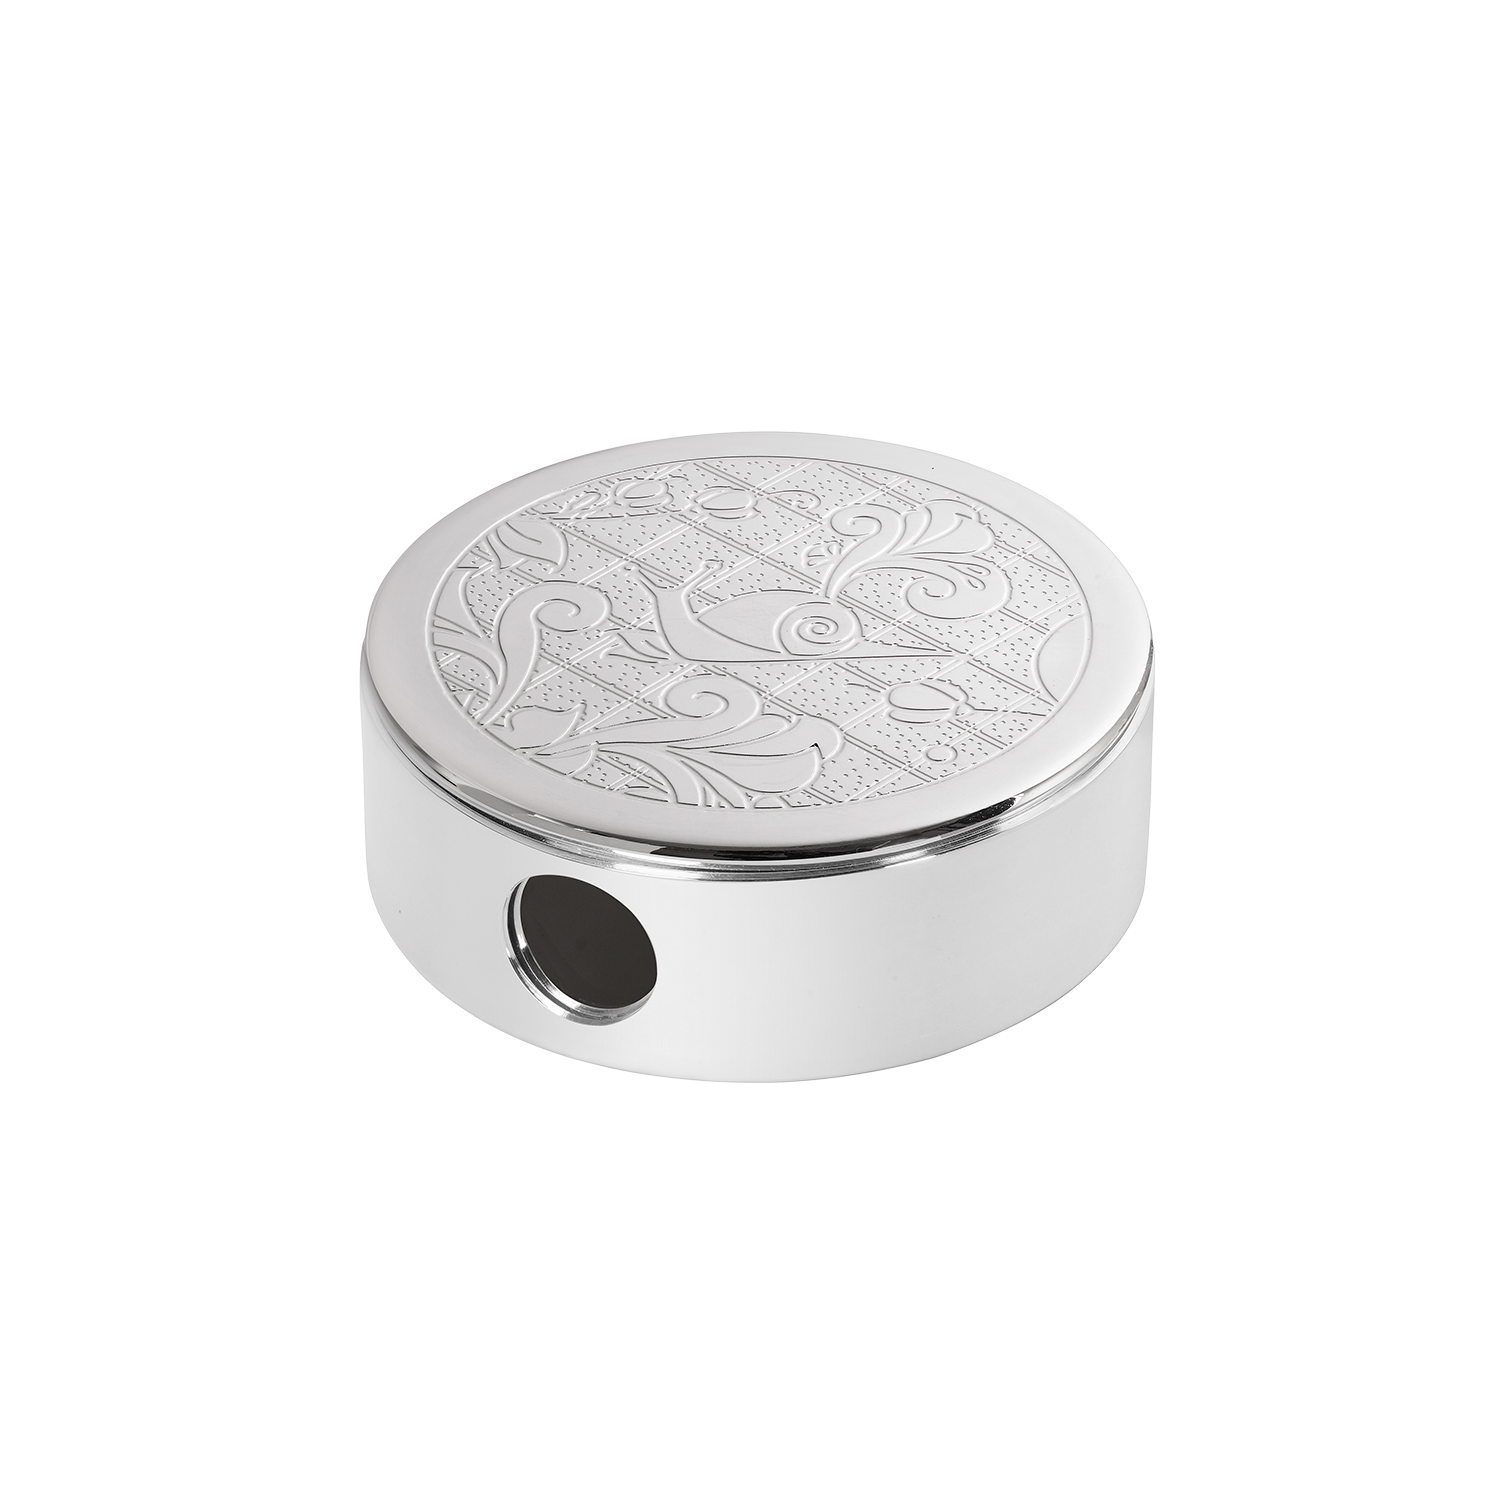 Silver-plated pocket ashtray